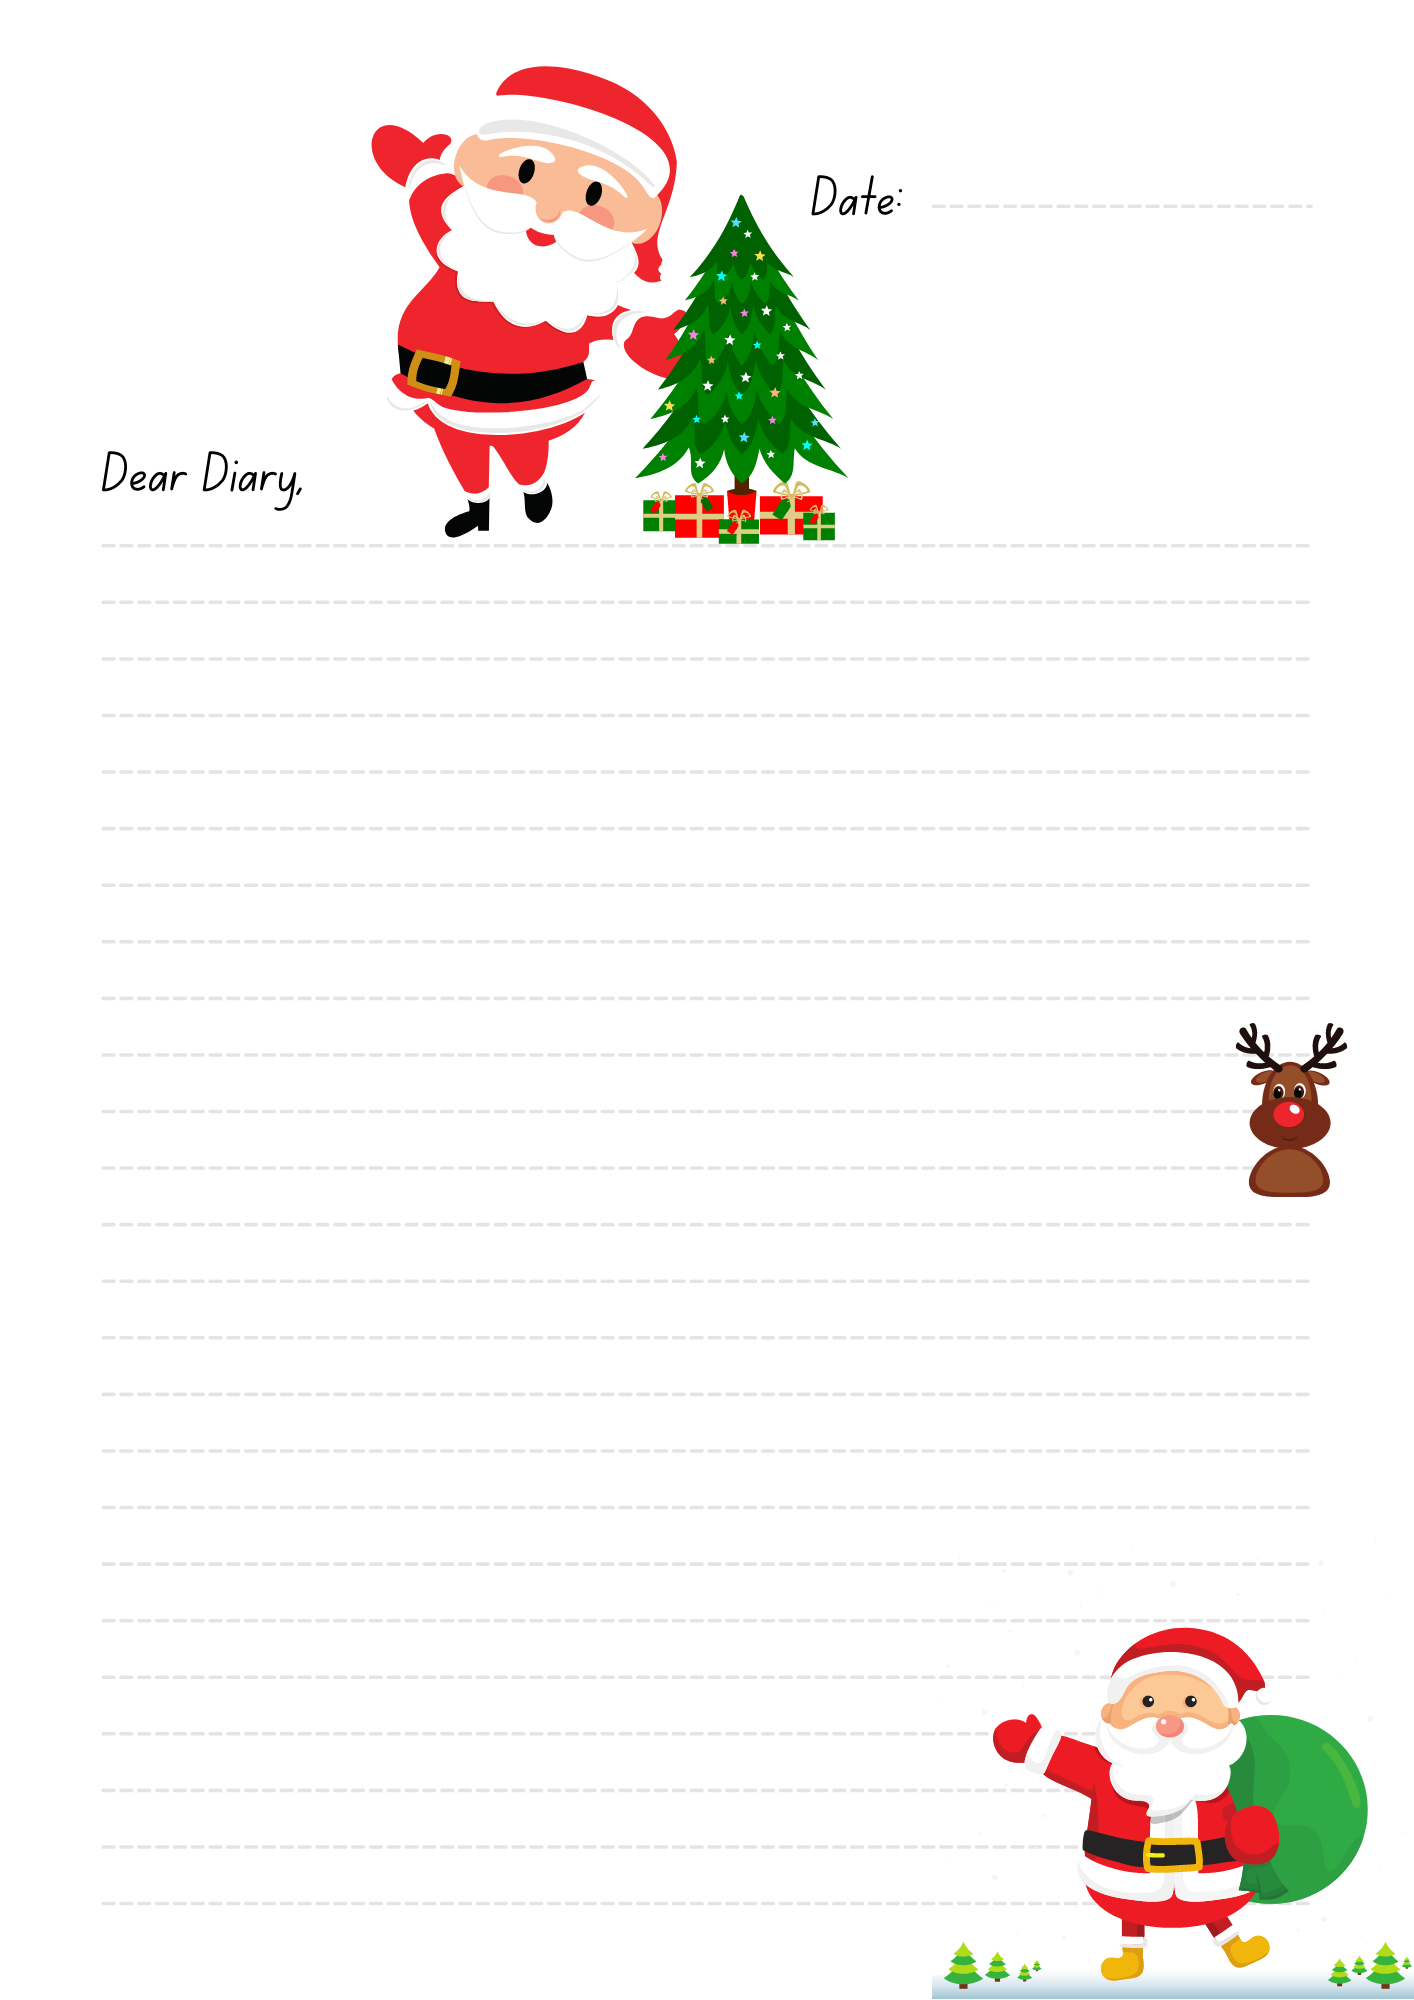 Christmas Writing Challenge Workbook - INSTANT DOWNLOAD